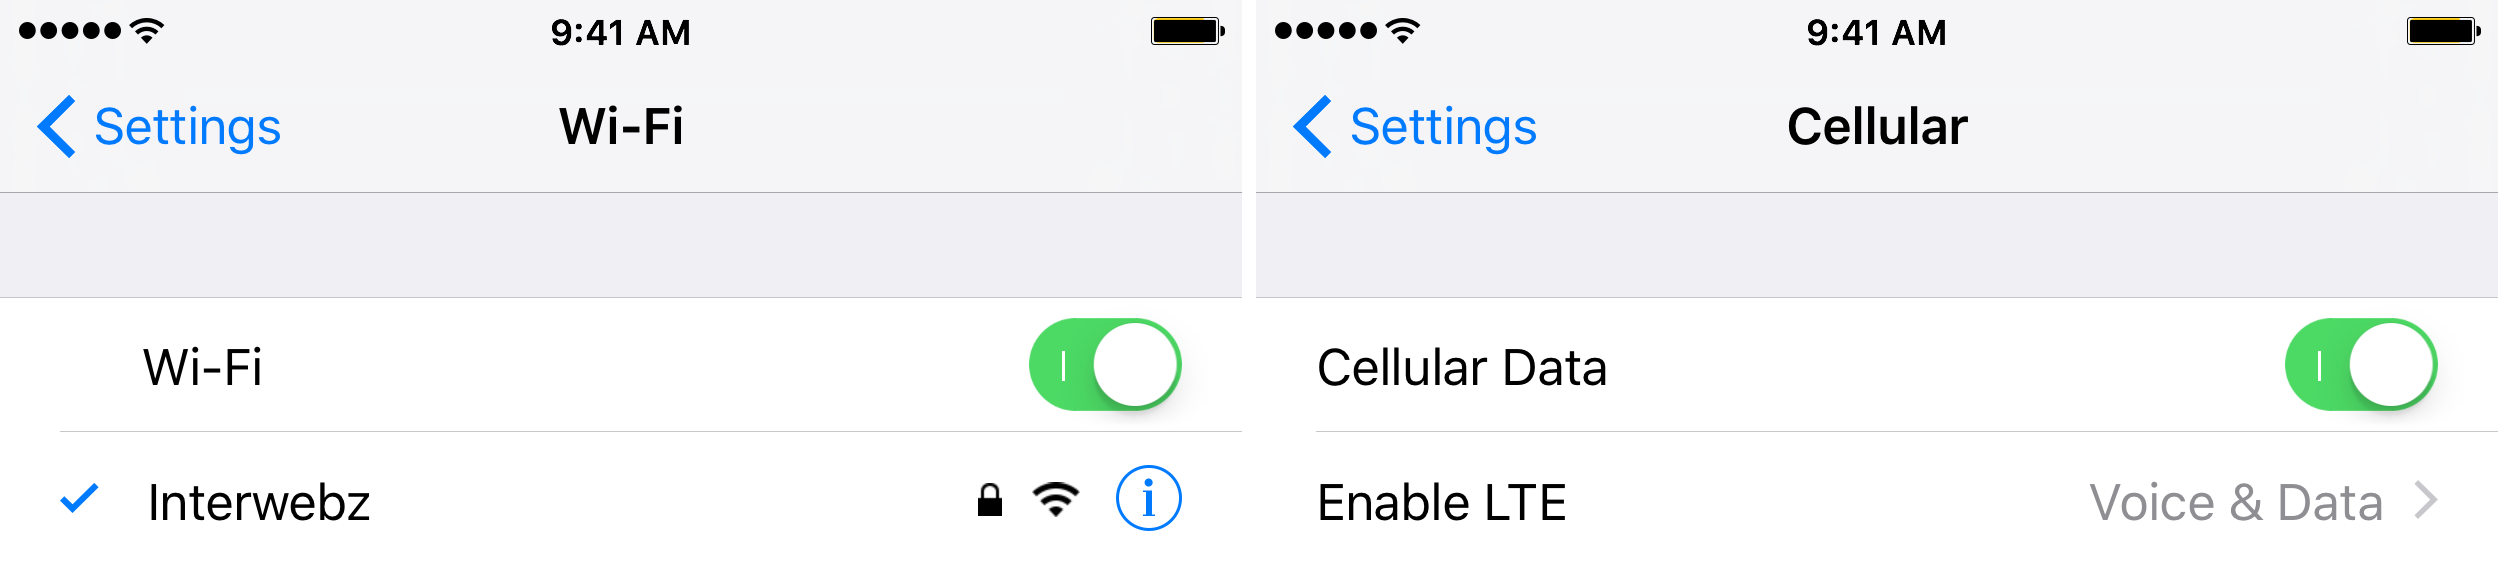 ios wi-fi and cellular settings